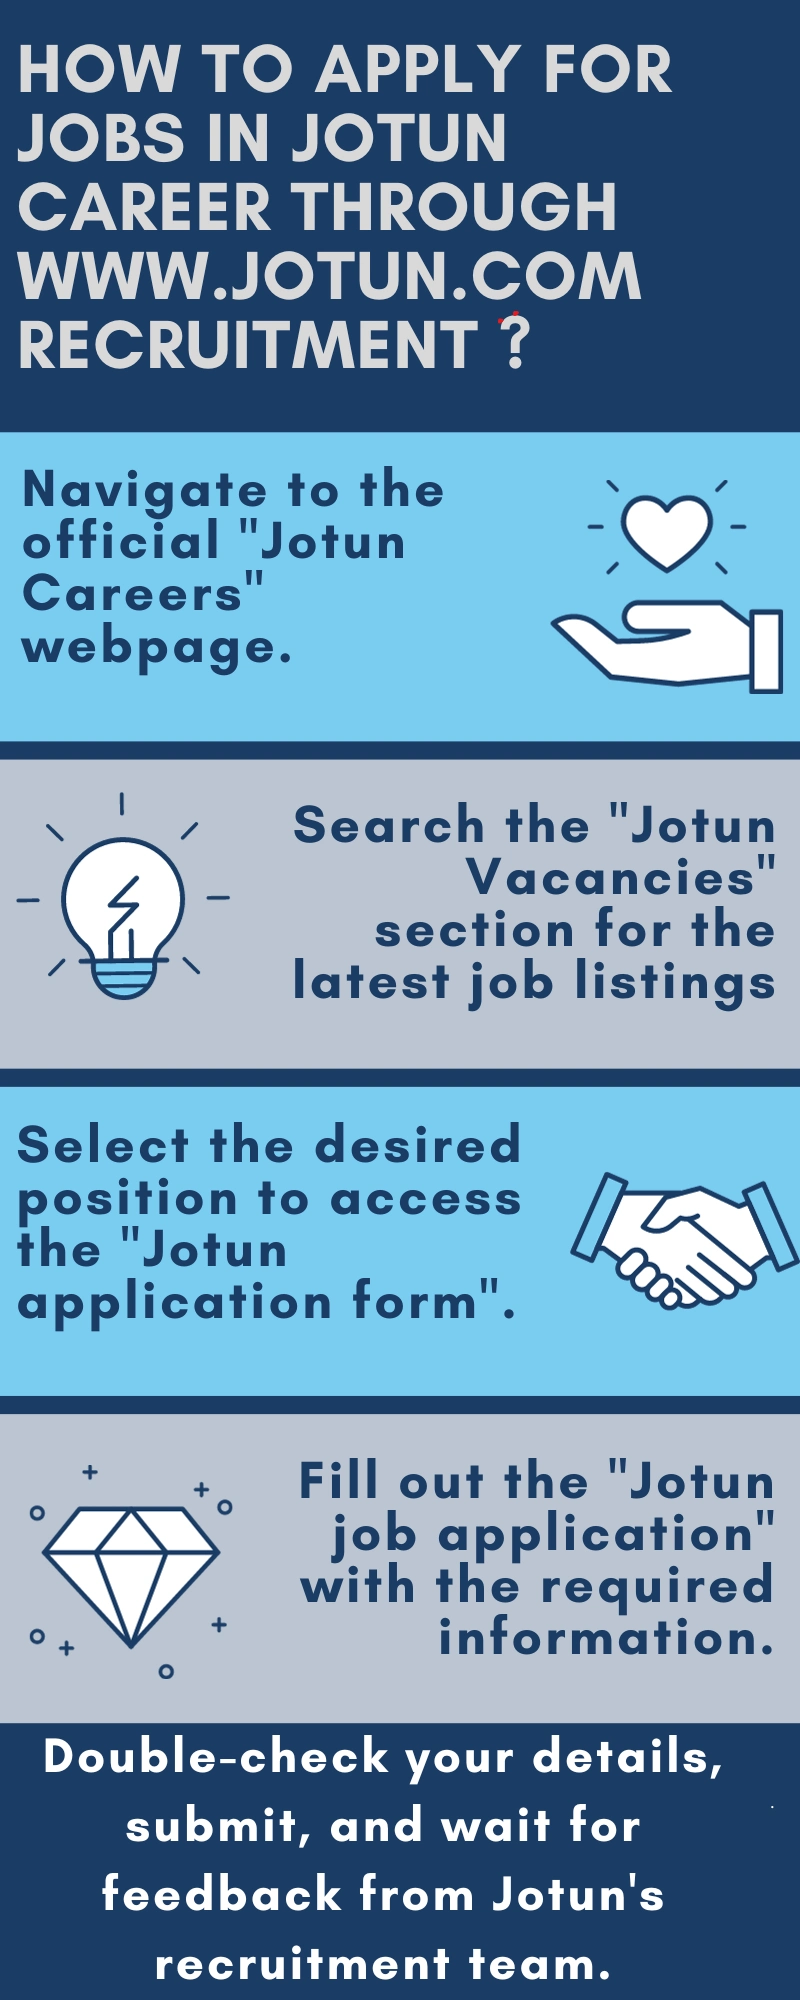 How to Apply for Jobs in Jotun Career through www.jotun.com recruitment?